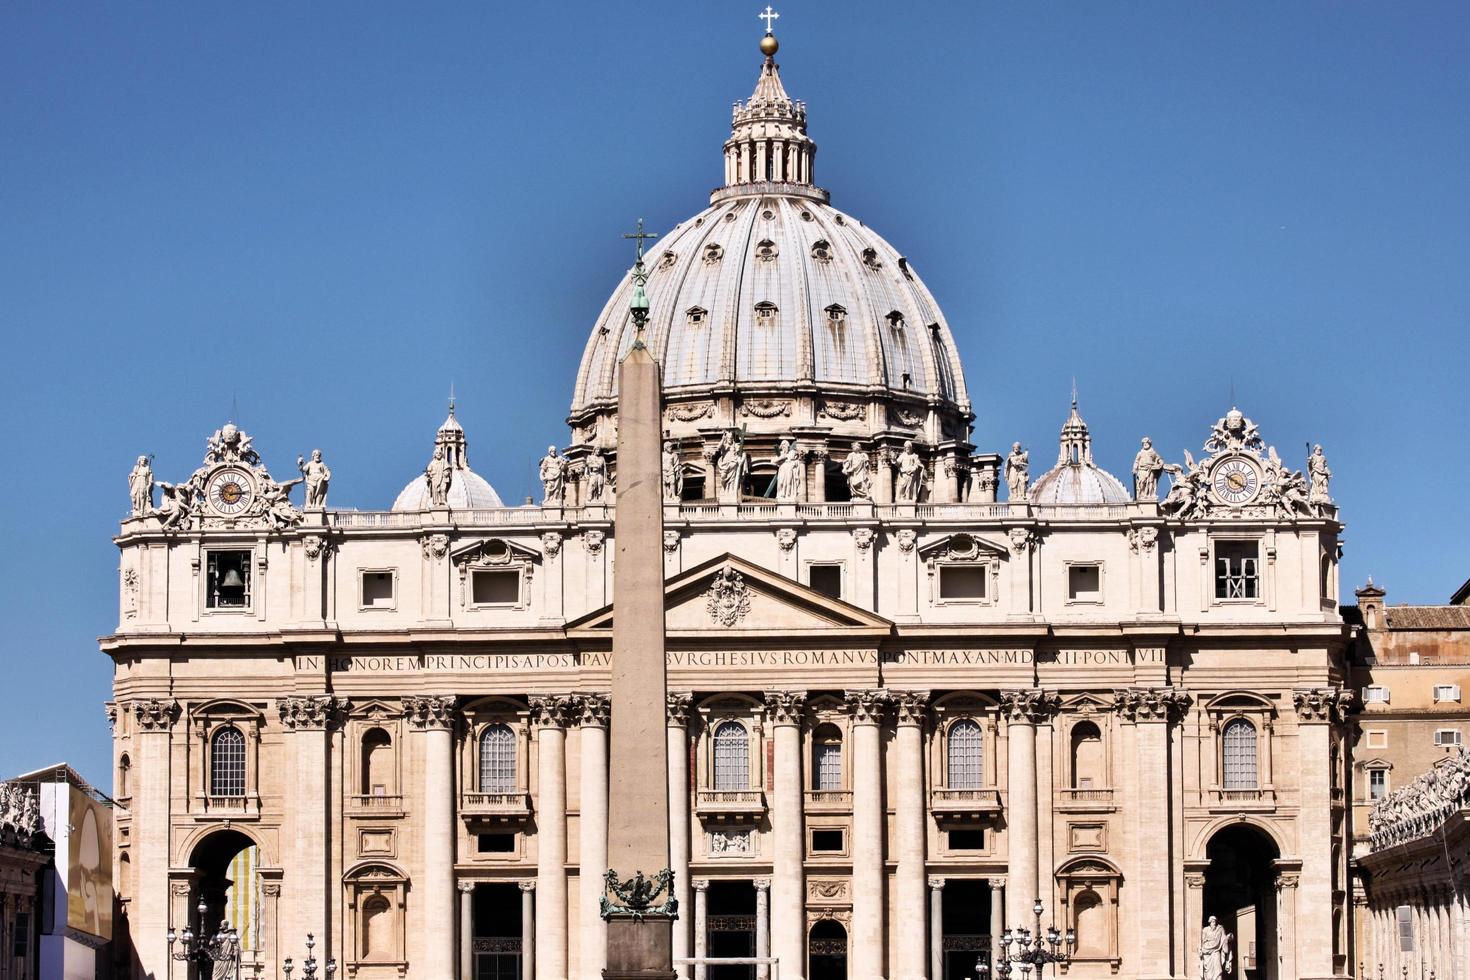 der vatikan in rom in italien. ein blick auf den vatikan in rom foto